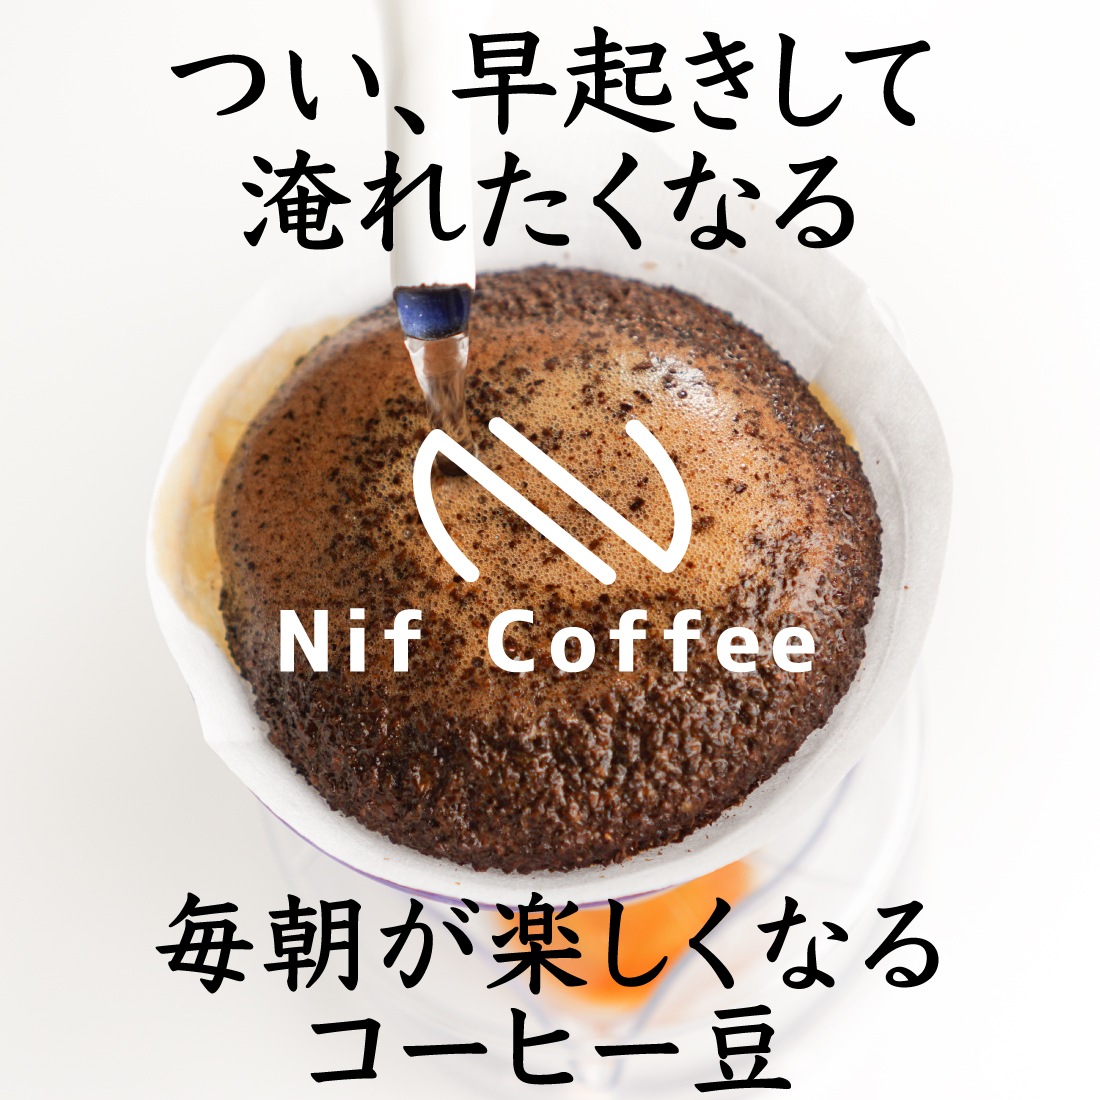 Nif Coffeeトップ画像